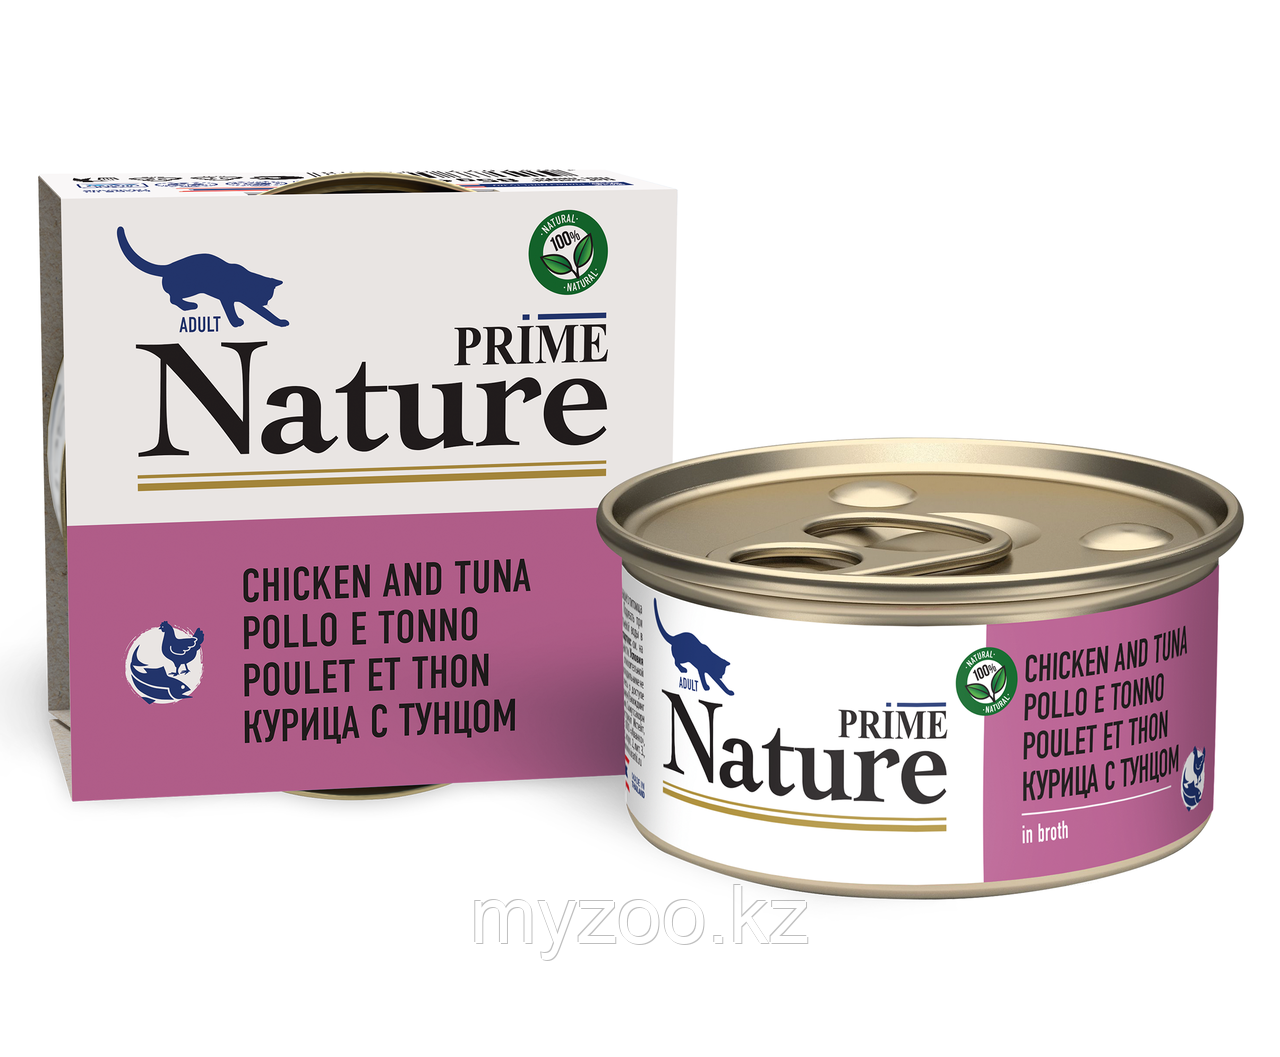 Prime Nature консервы для кошек курица с тунцом в бульоне, 85гр